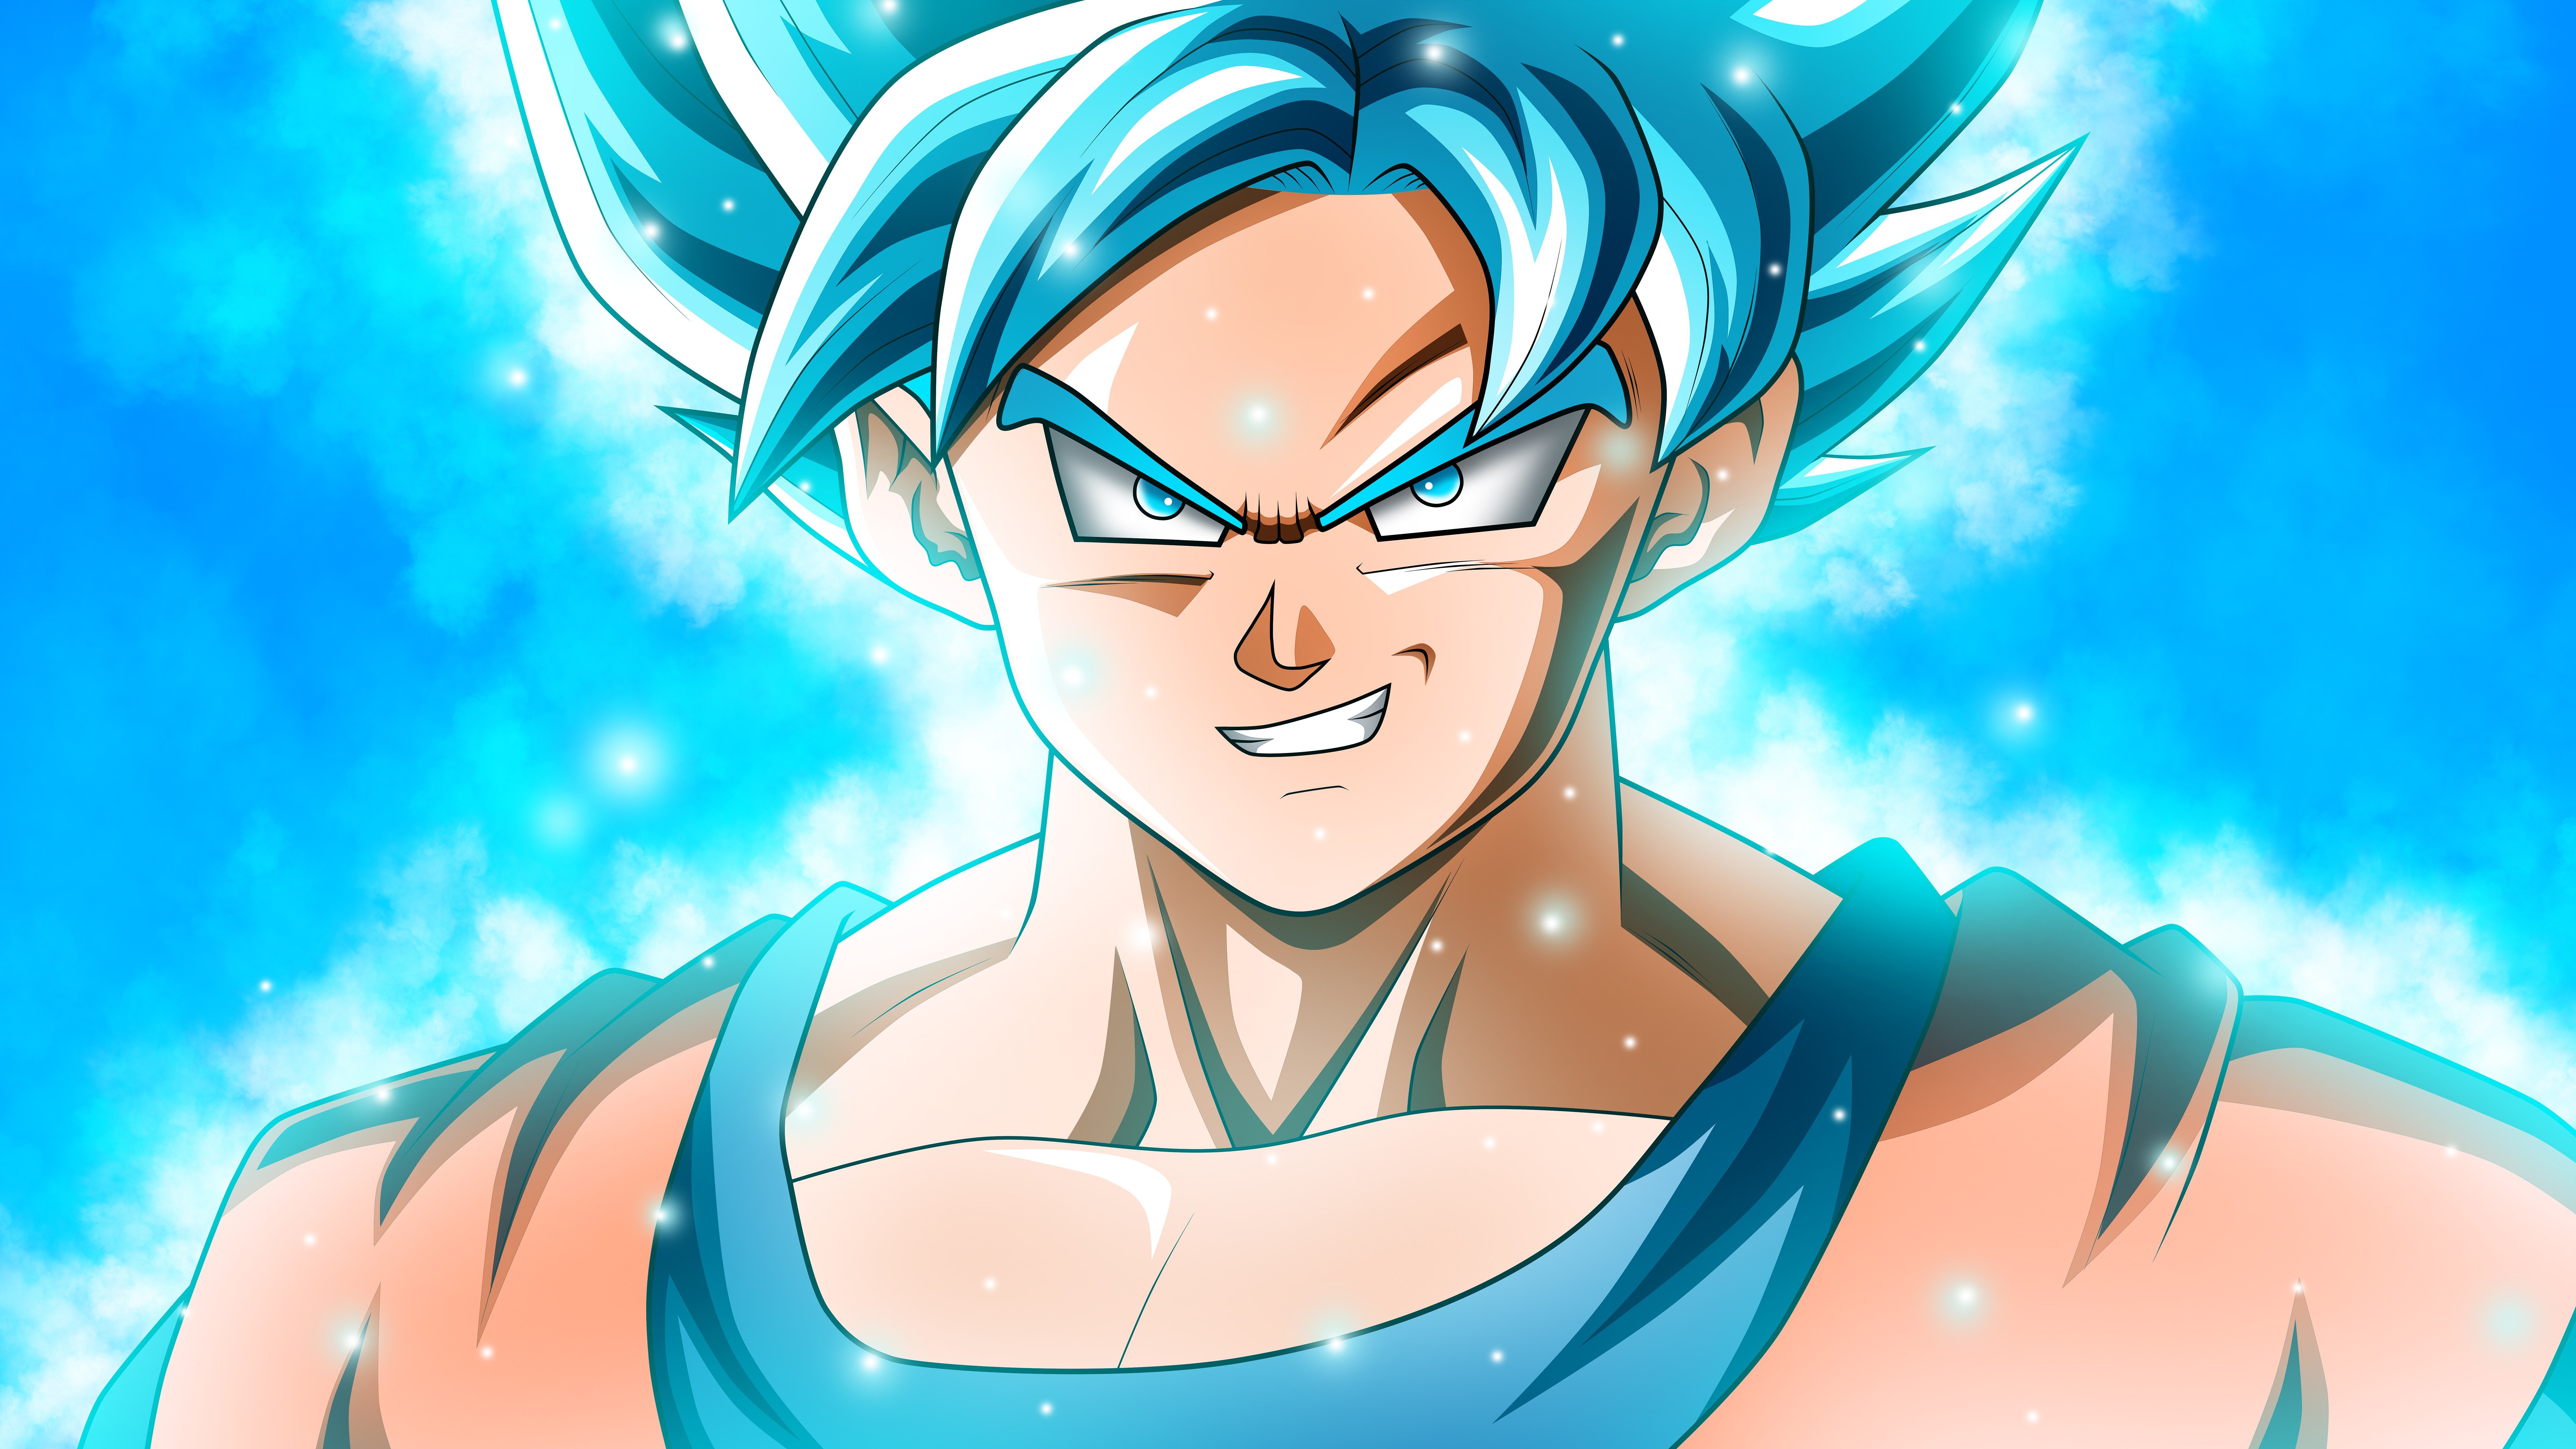 Goku the Super Saiyan by ANi